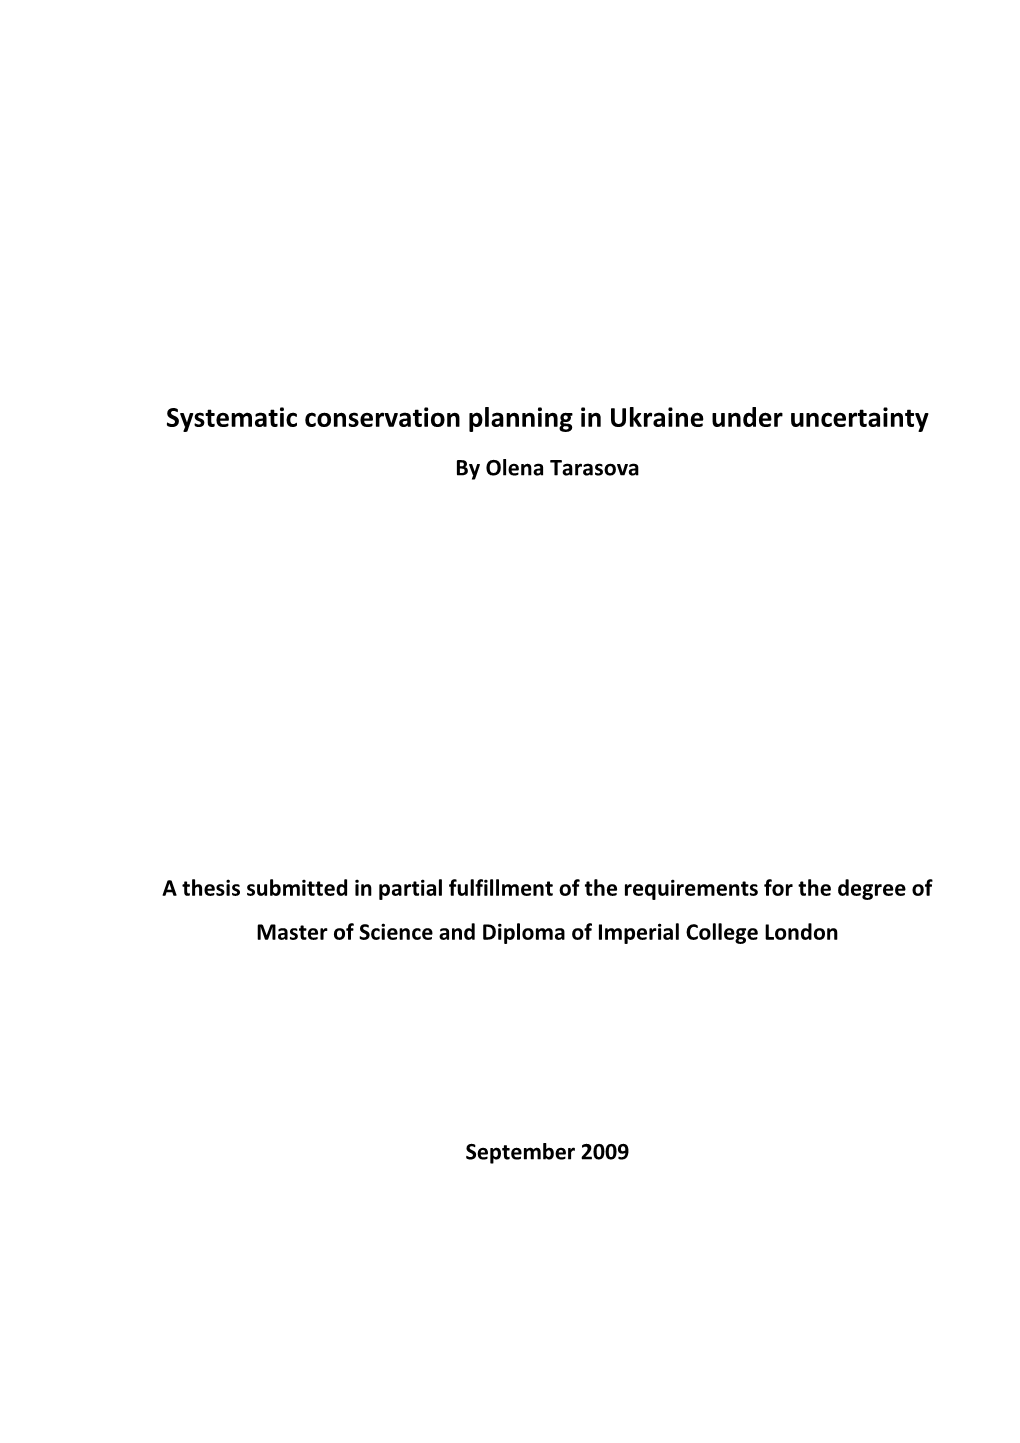 Systematic Conservation Planning in Ukraine Under Uncertainty by Olena Tarasova